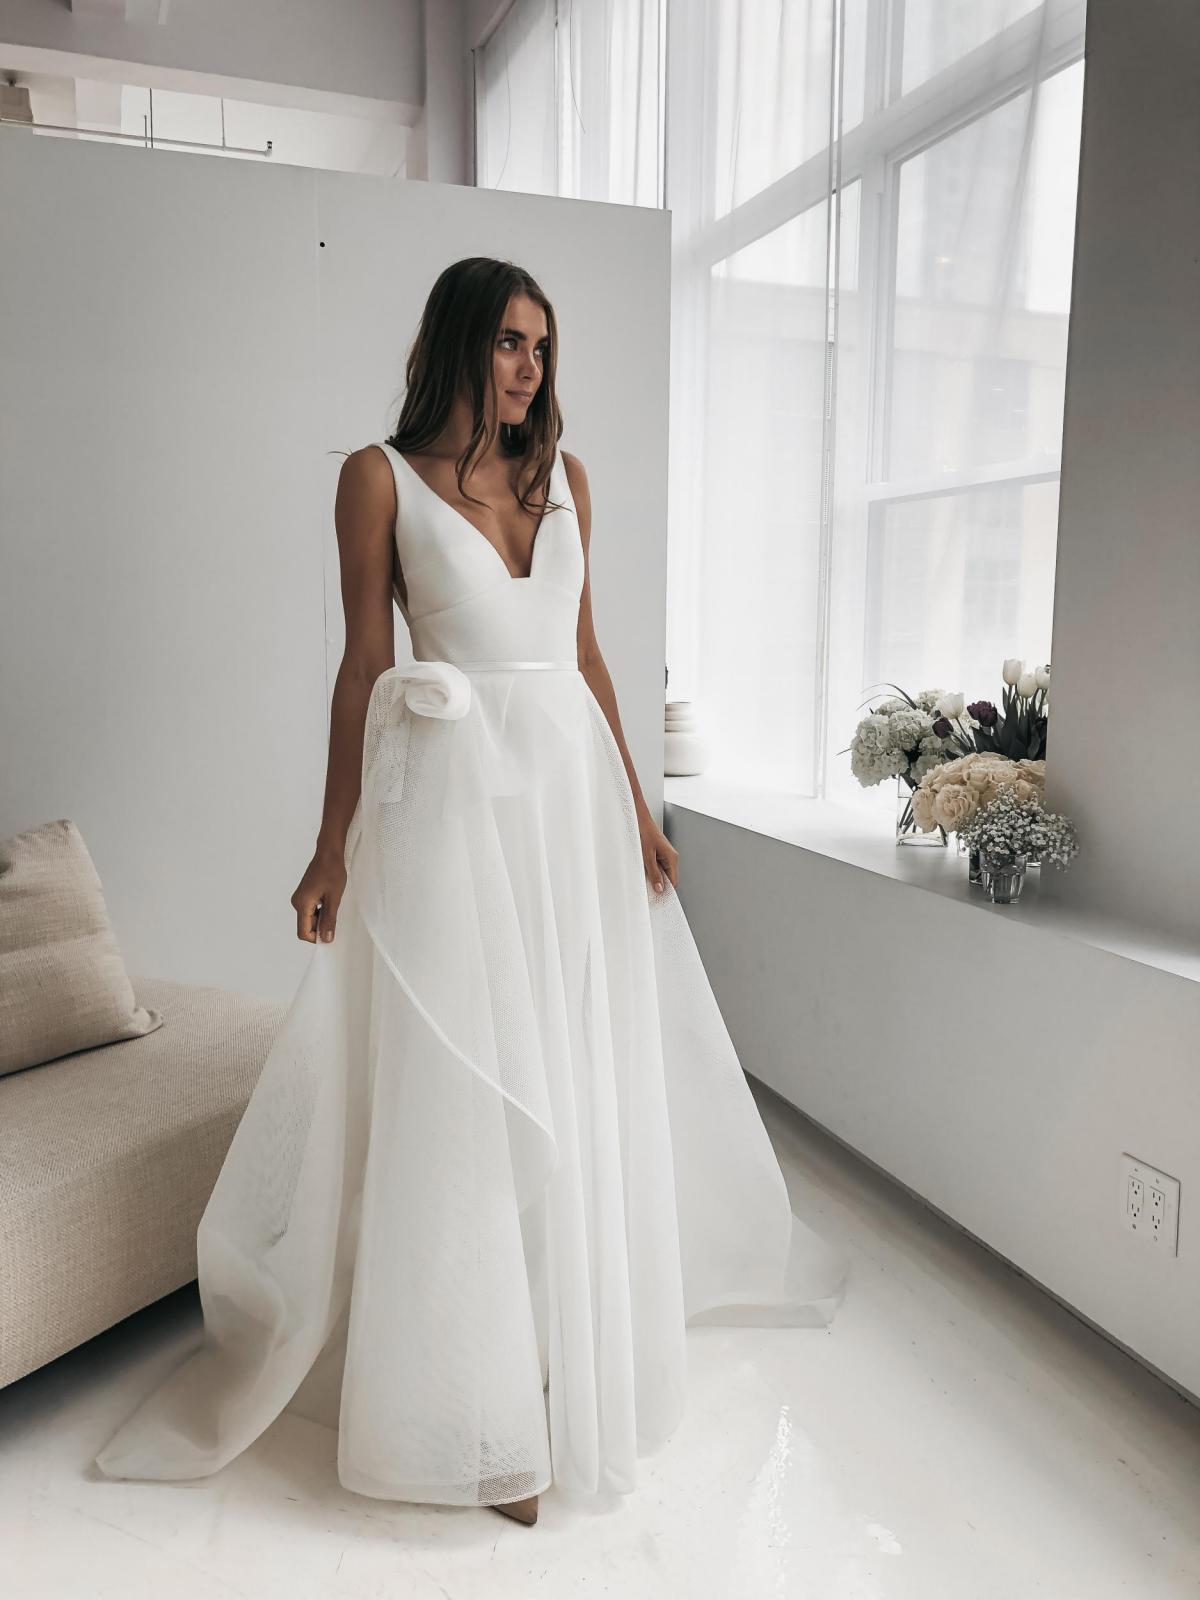 Aisha Karen Willis Holmes wedding dresses at One Fine Day for NYC bridal market.